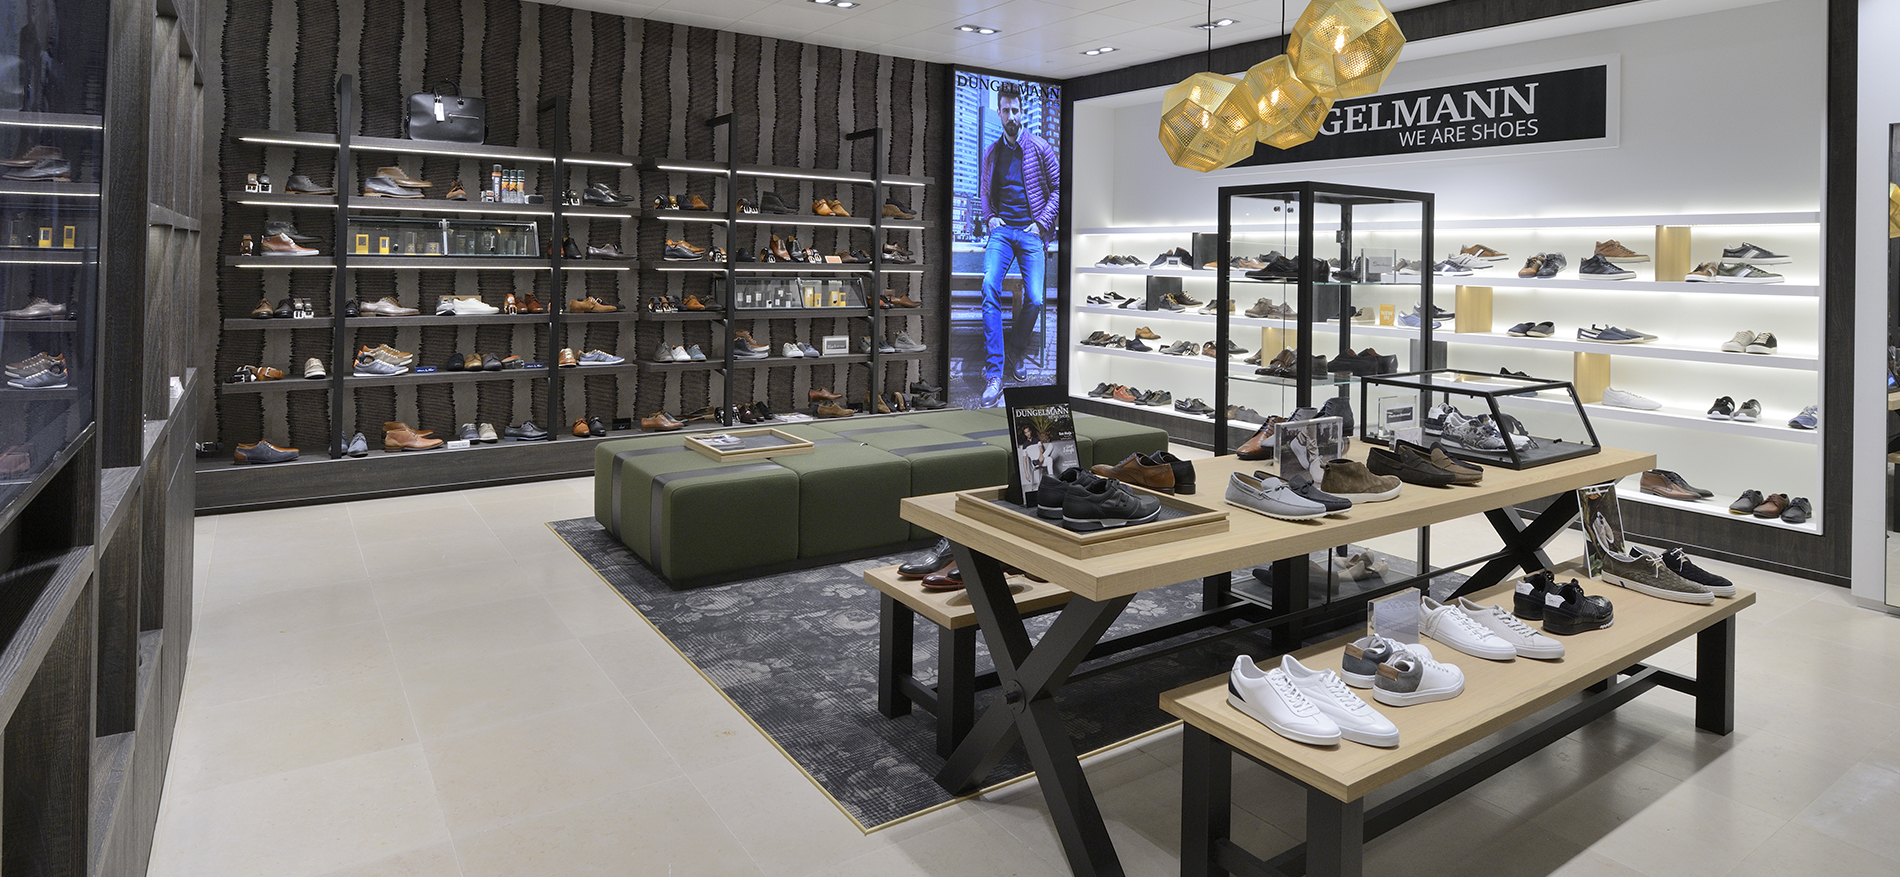 Minister Fruitig camouflage Shop-in-shop interior shoe shop Dungelmann by WSB